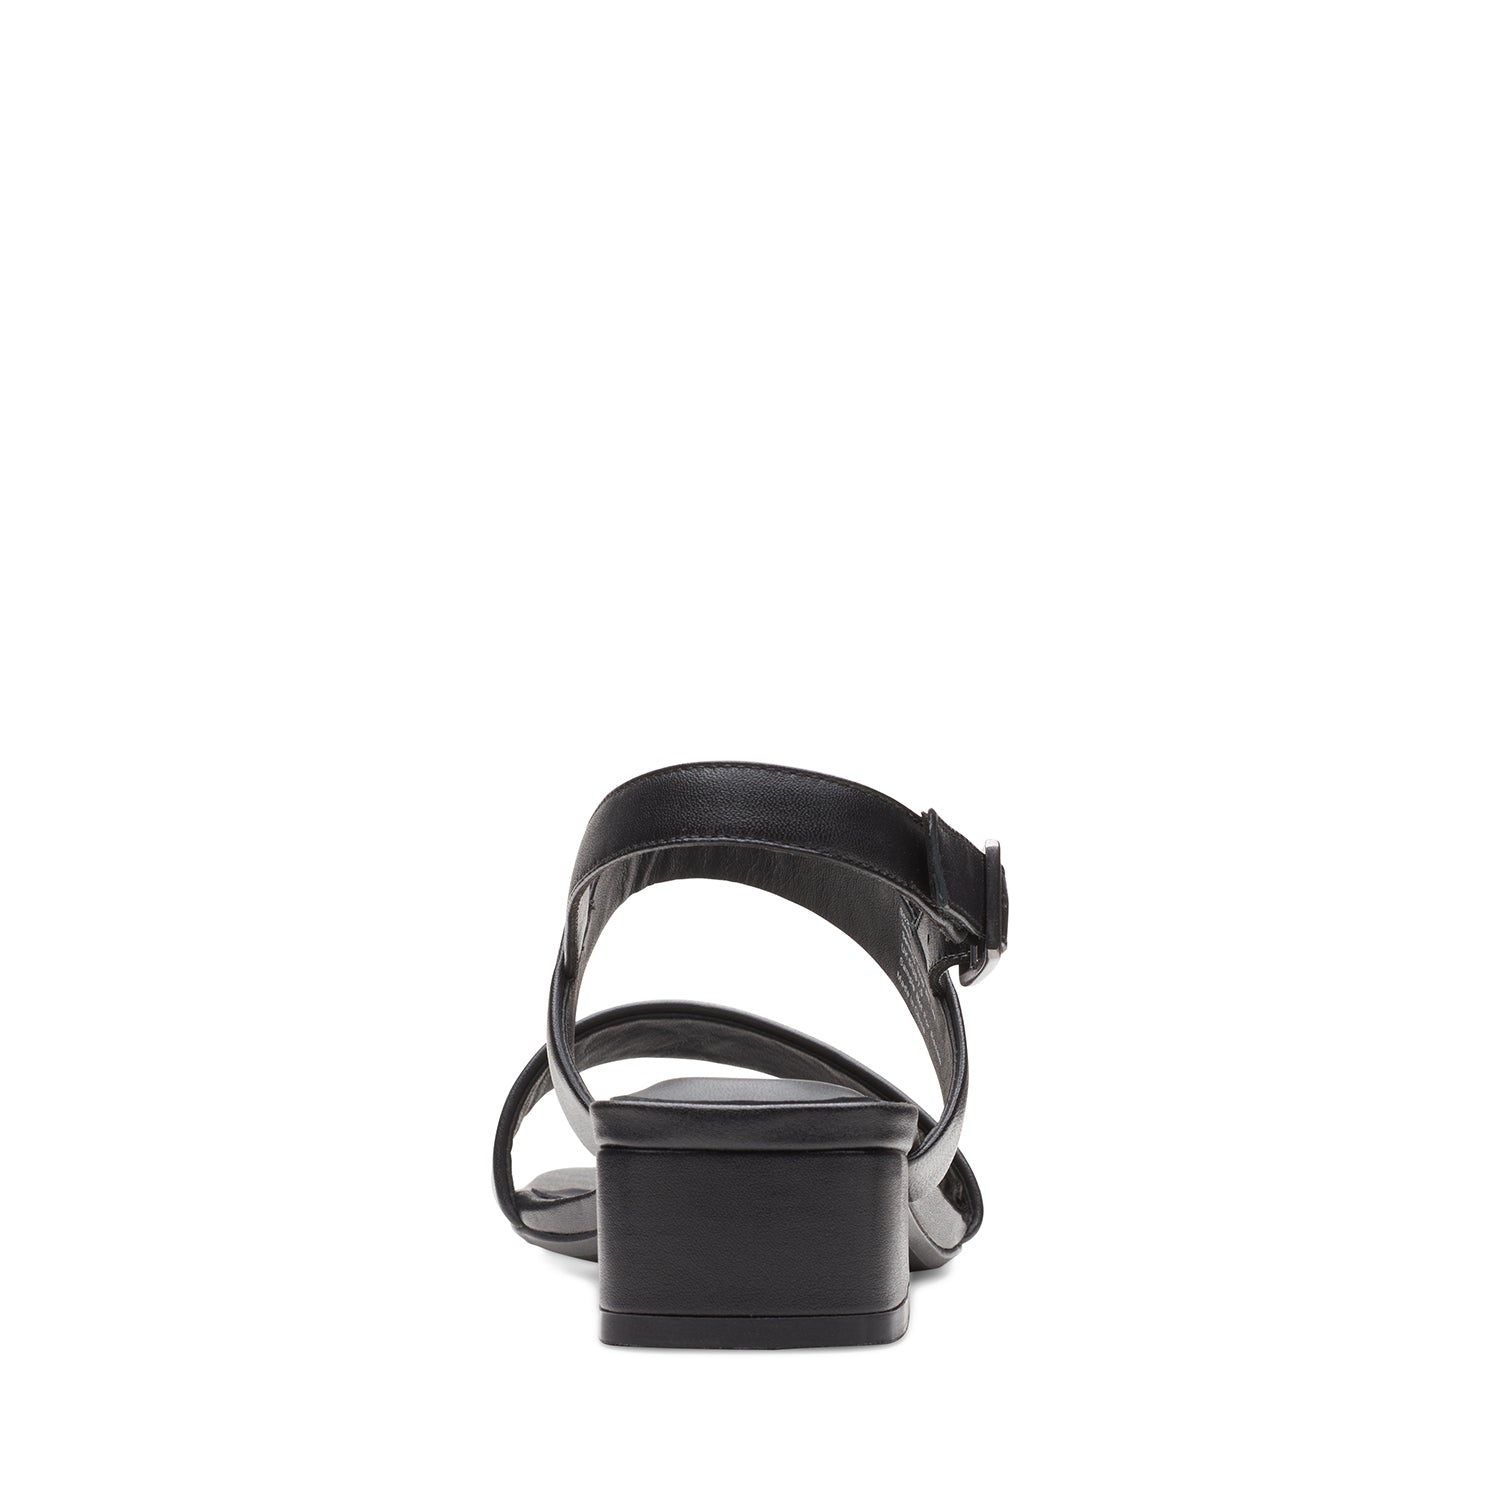 Clarks Seren25 Strap Sandals - Black Leather - 261648964 - D Width (Standard Fit)